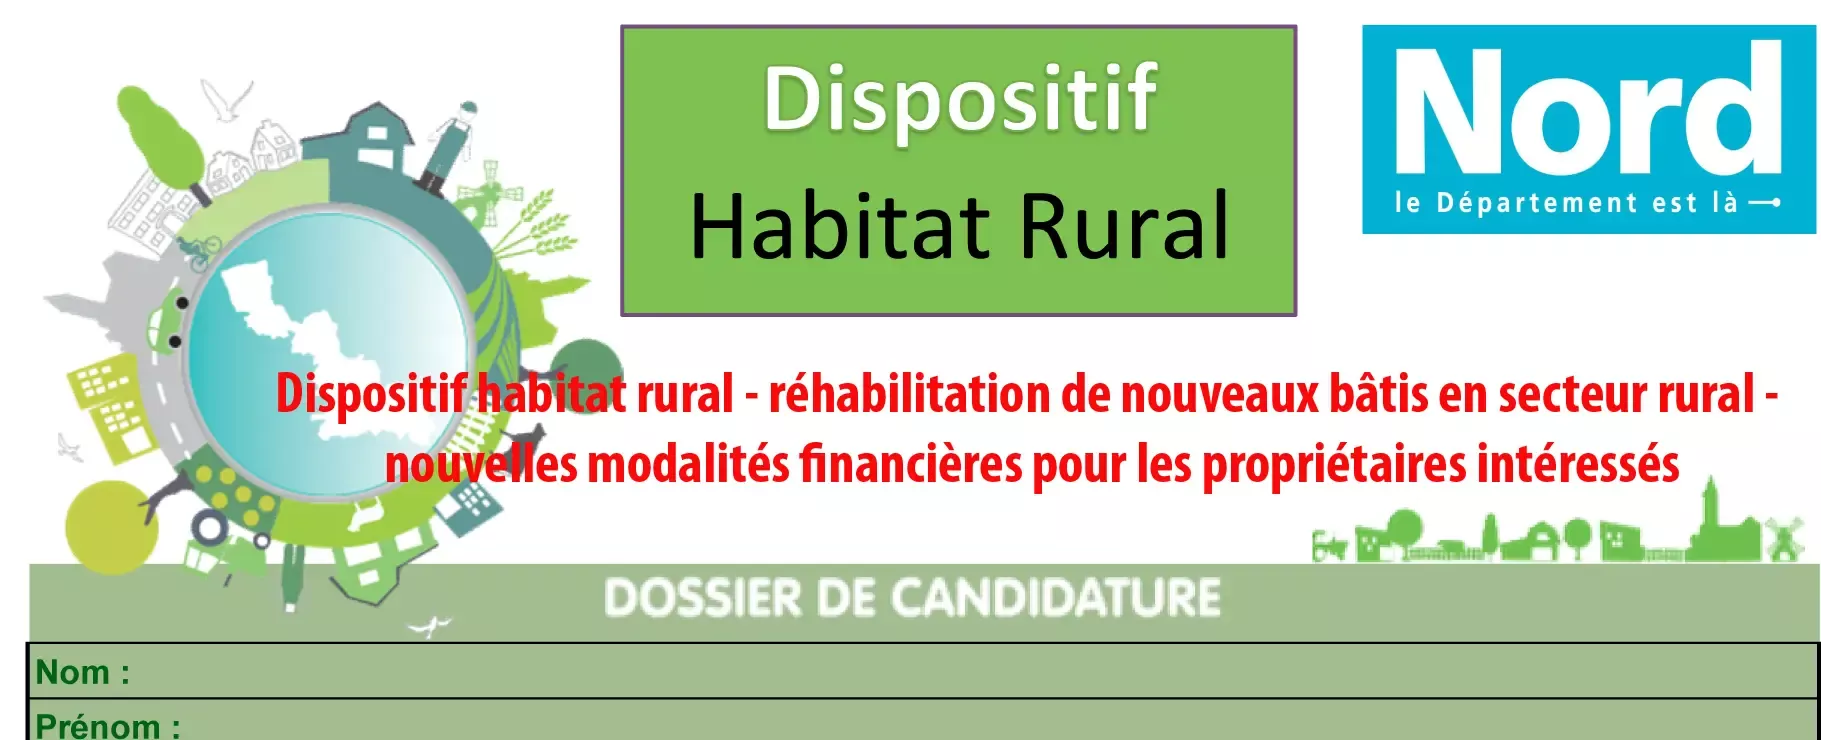 Dossier de candidature dispositif habitat rural